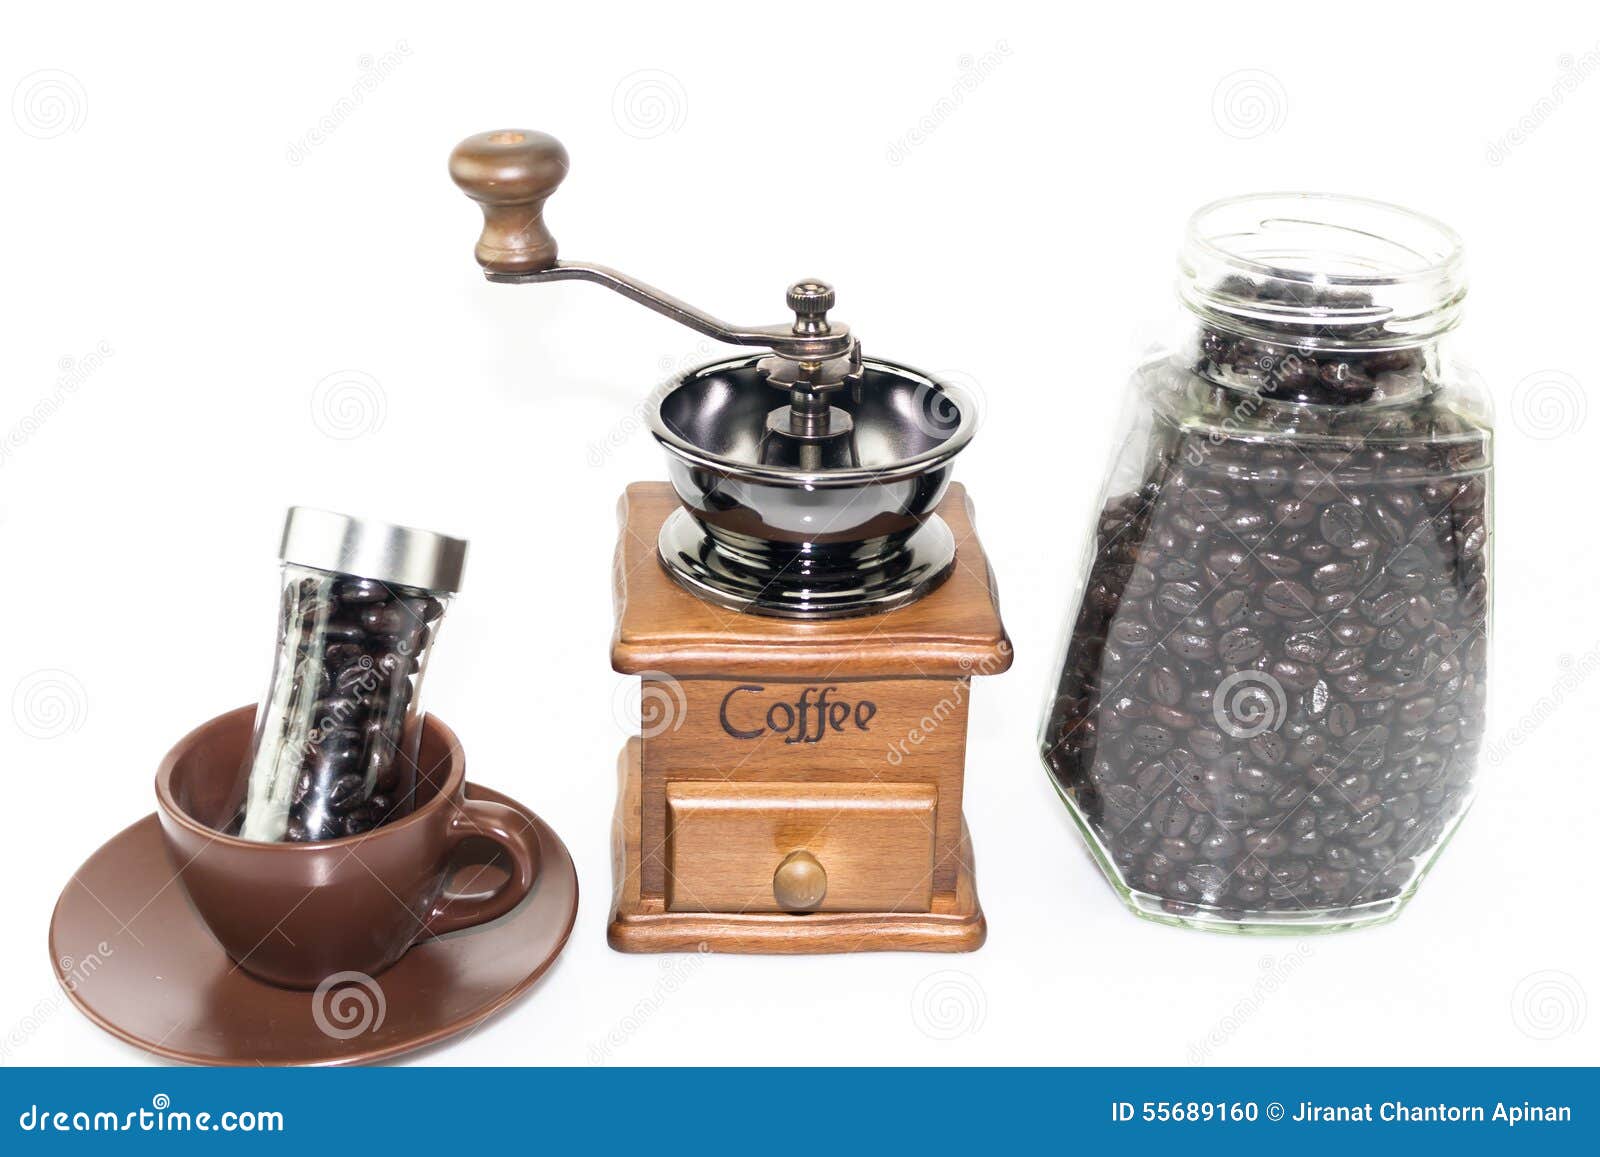 https://thumbs.dreamstime.com/z/coffee-blender-spinner-coffee-bean-glass-jar-bottle-ceremic-cup-55689160.jpg